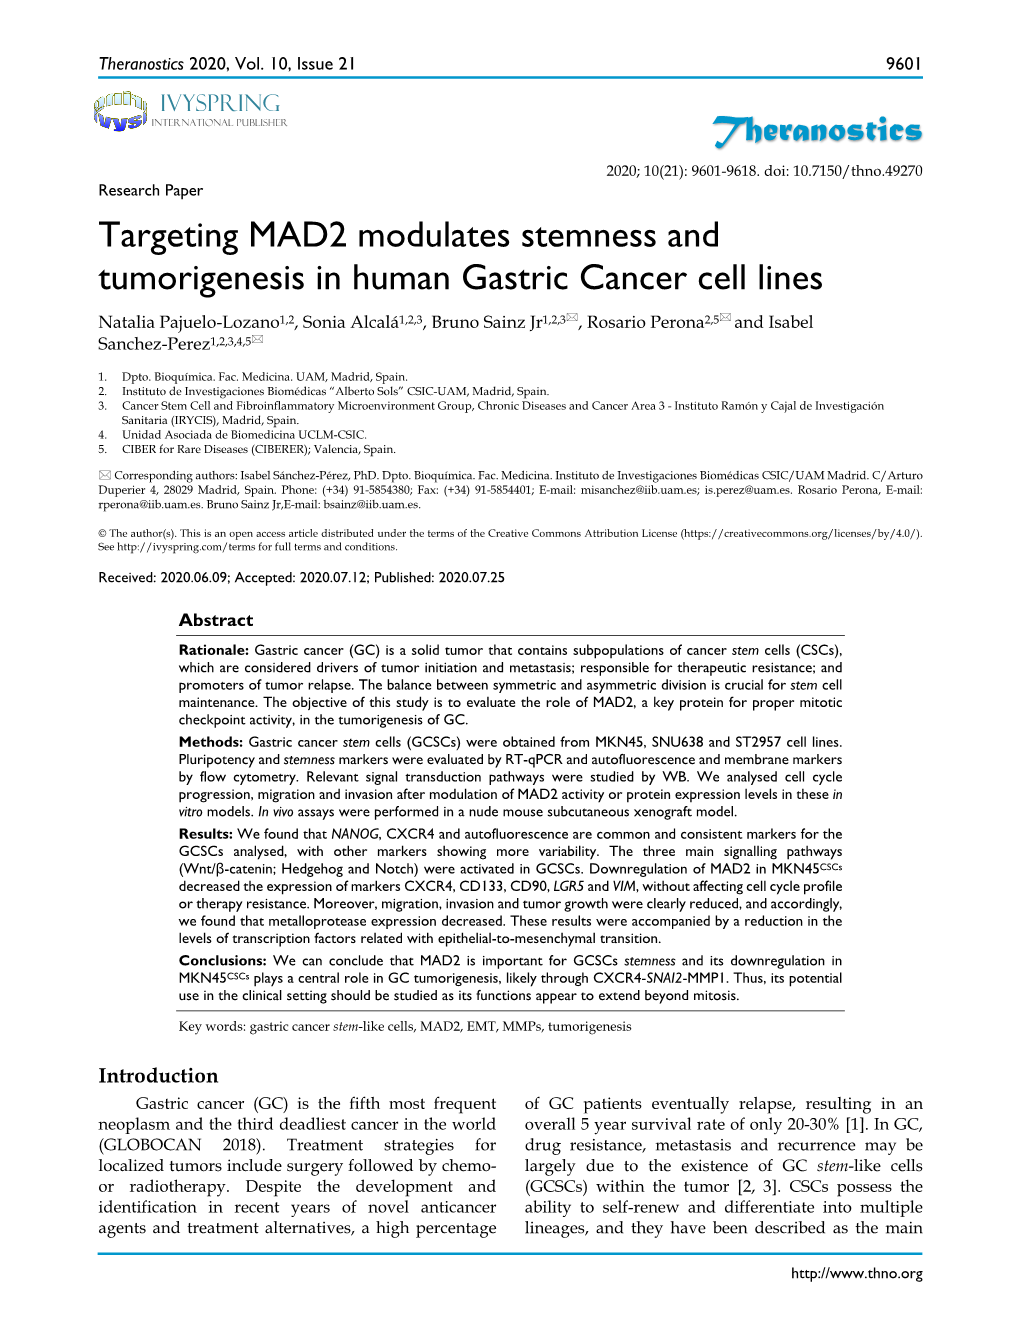 Theranostics Targeting MAD2 Modulates Stemness And